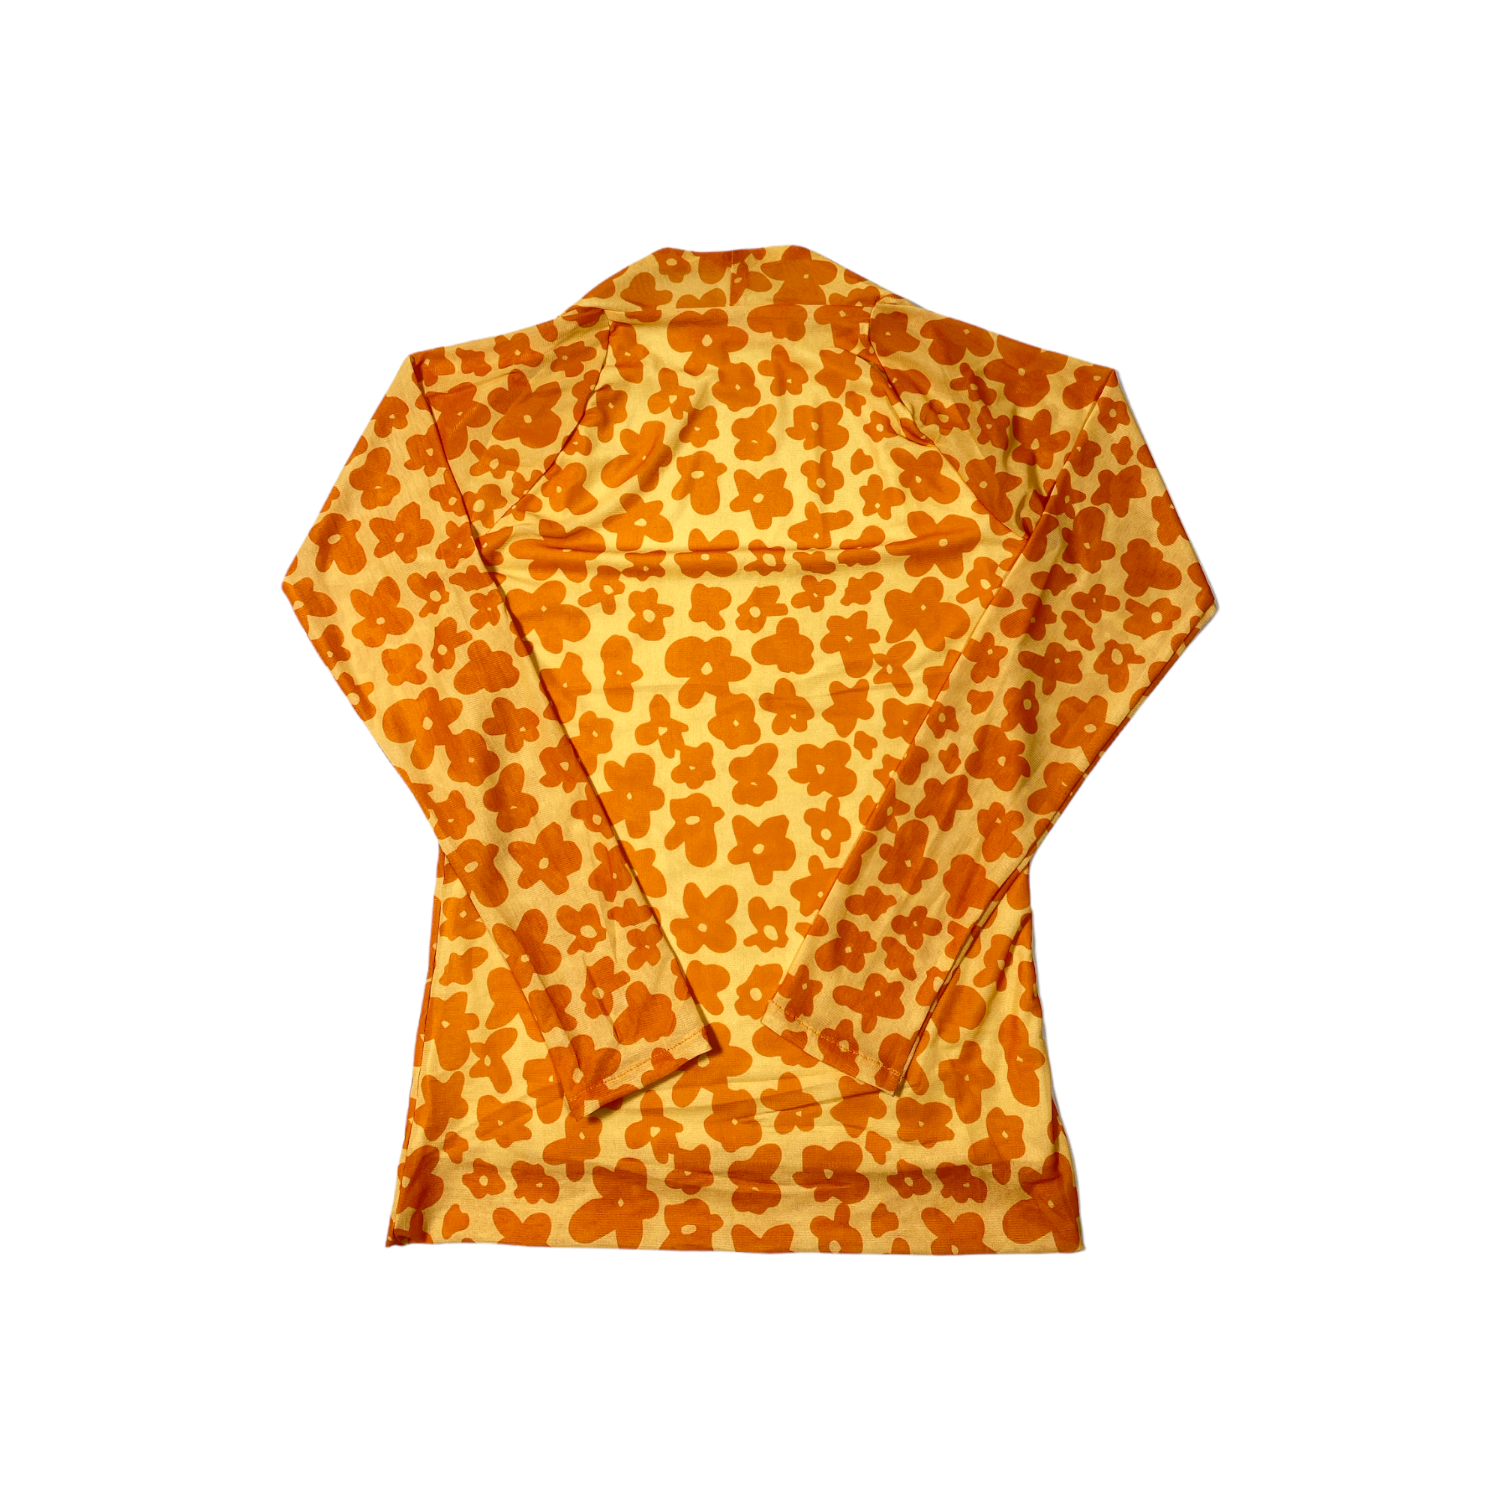 Square - neck floral Top (Orange)